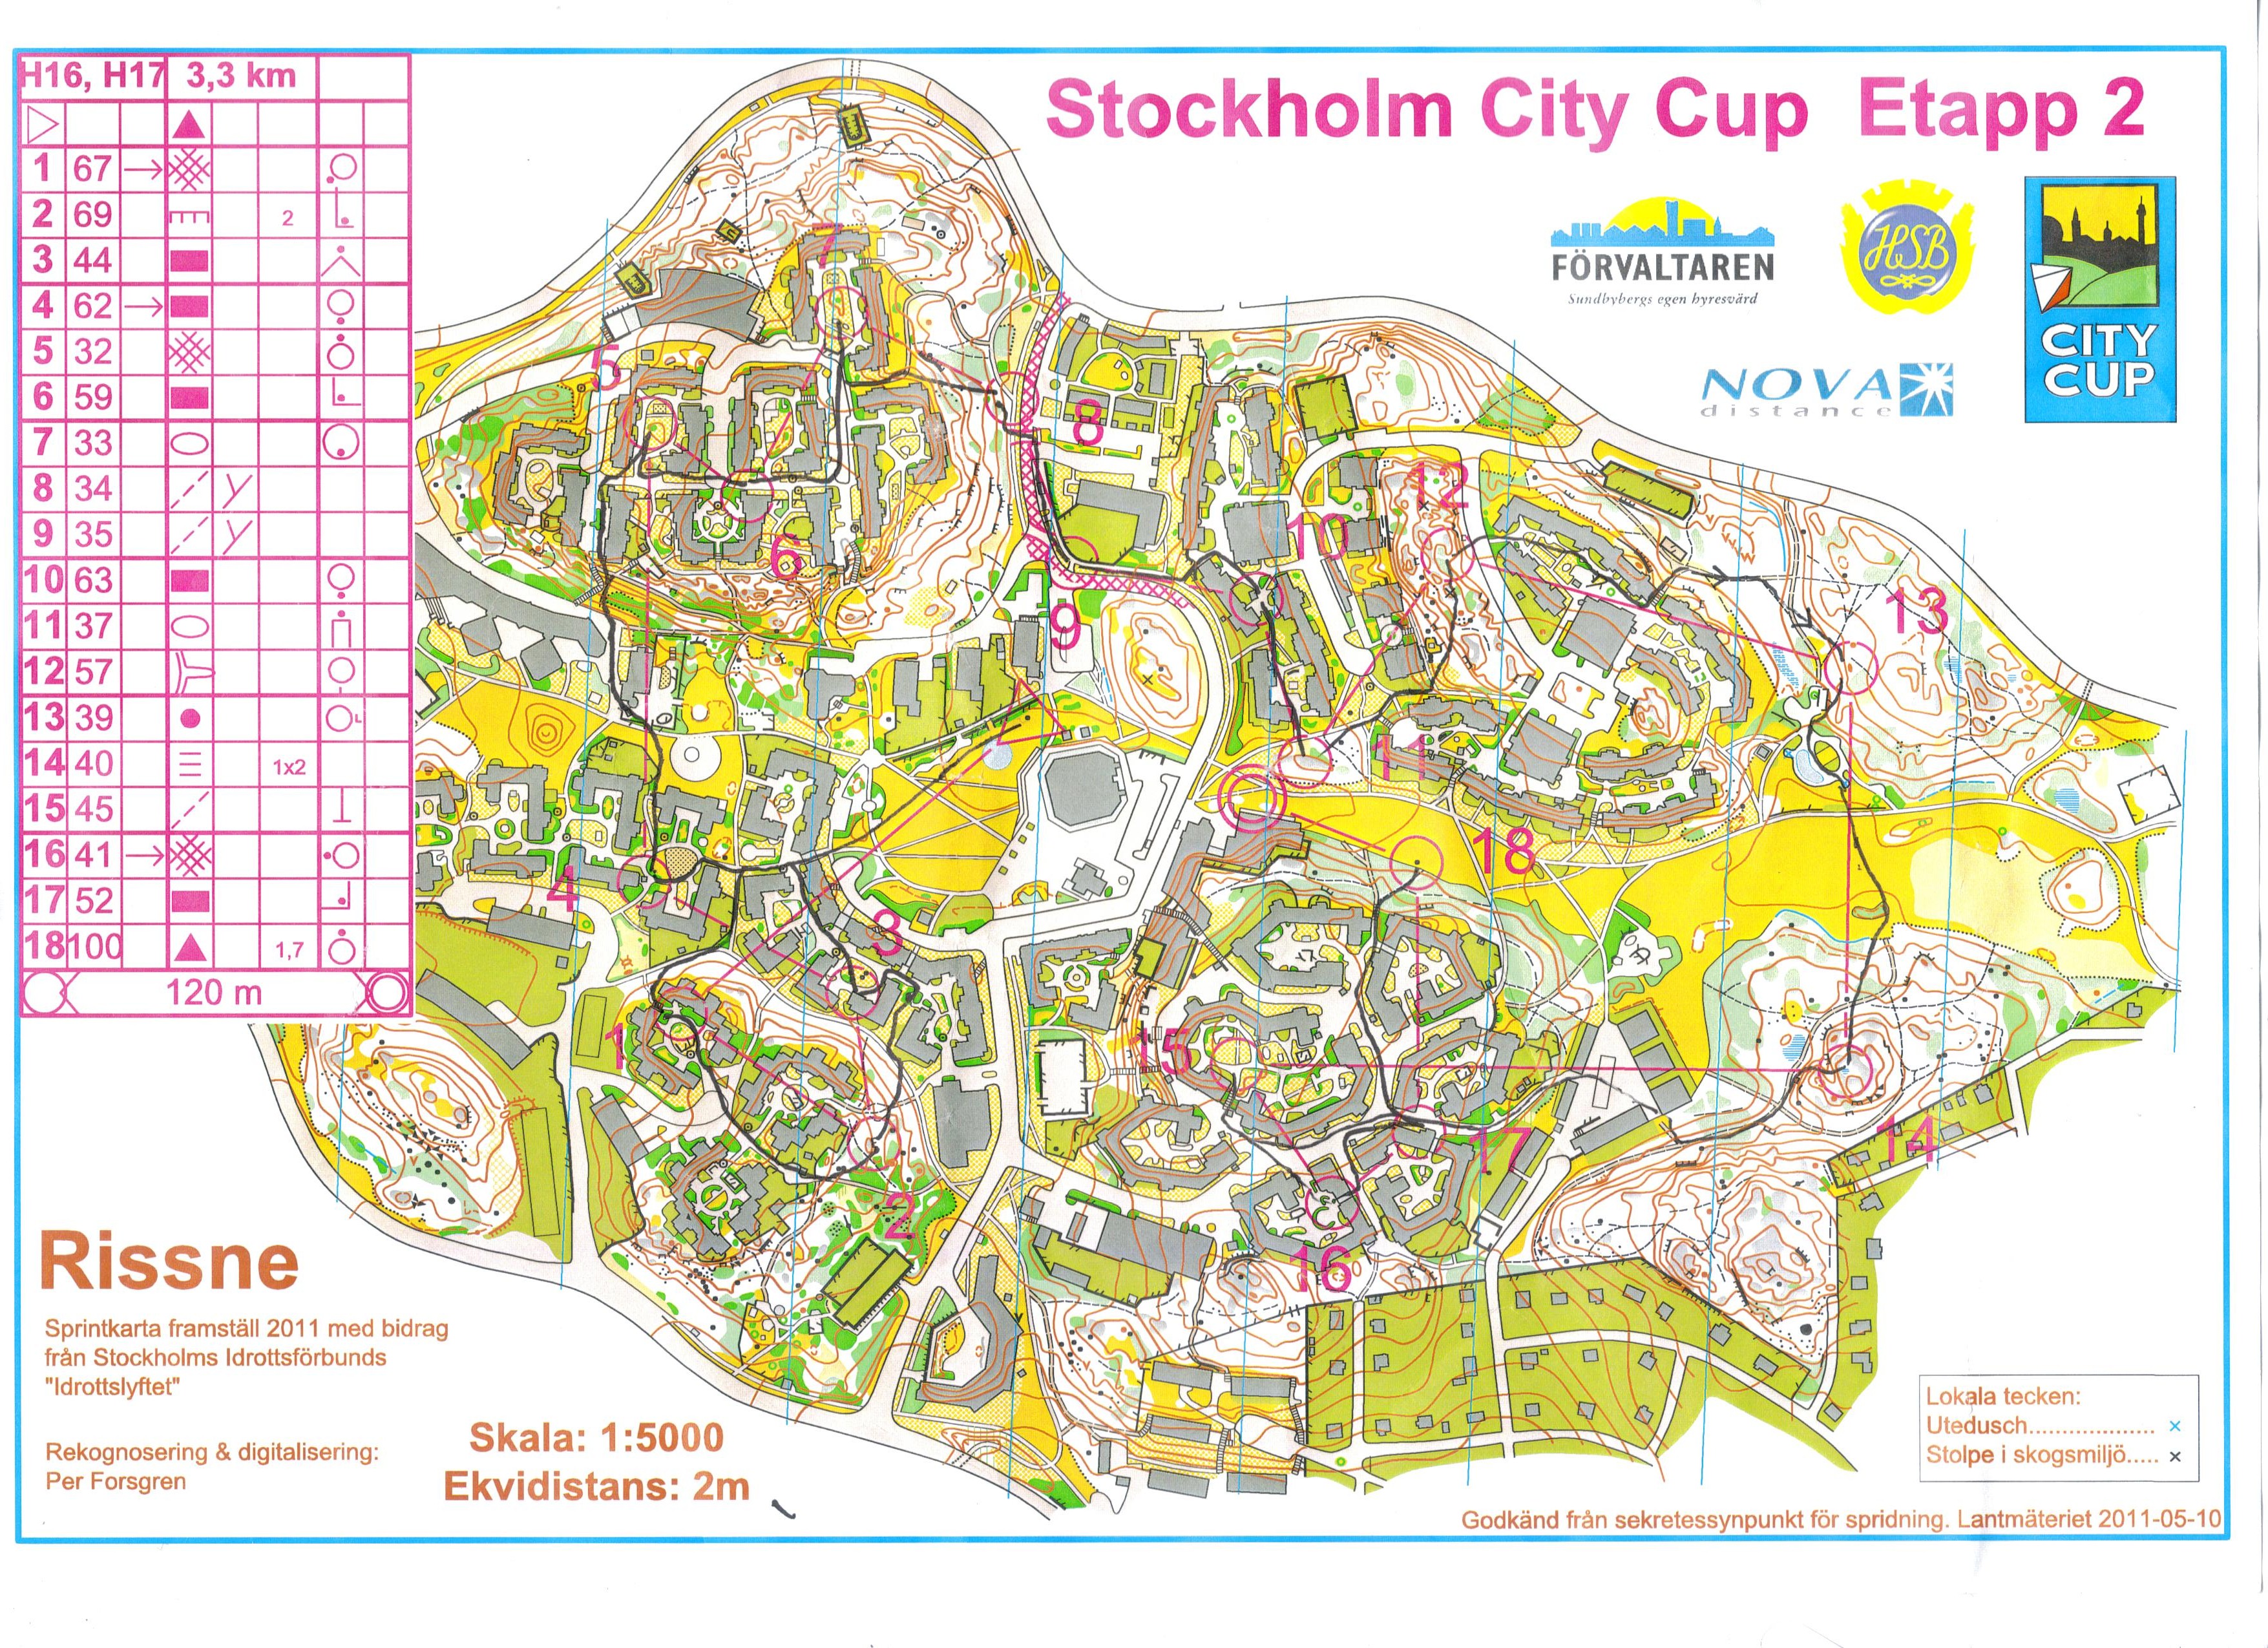 Stockholm City Cup Etapp 2 (20/05/2011)